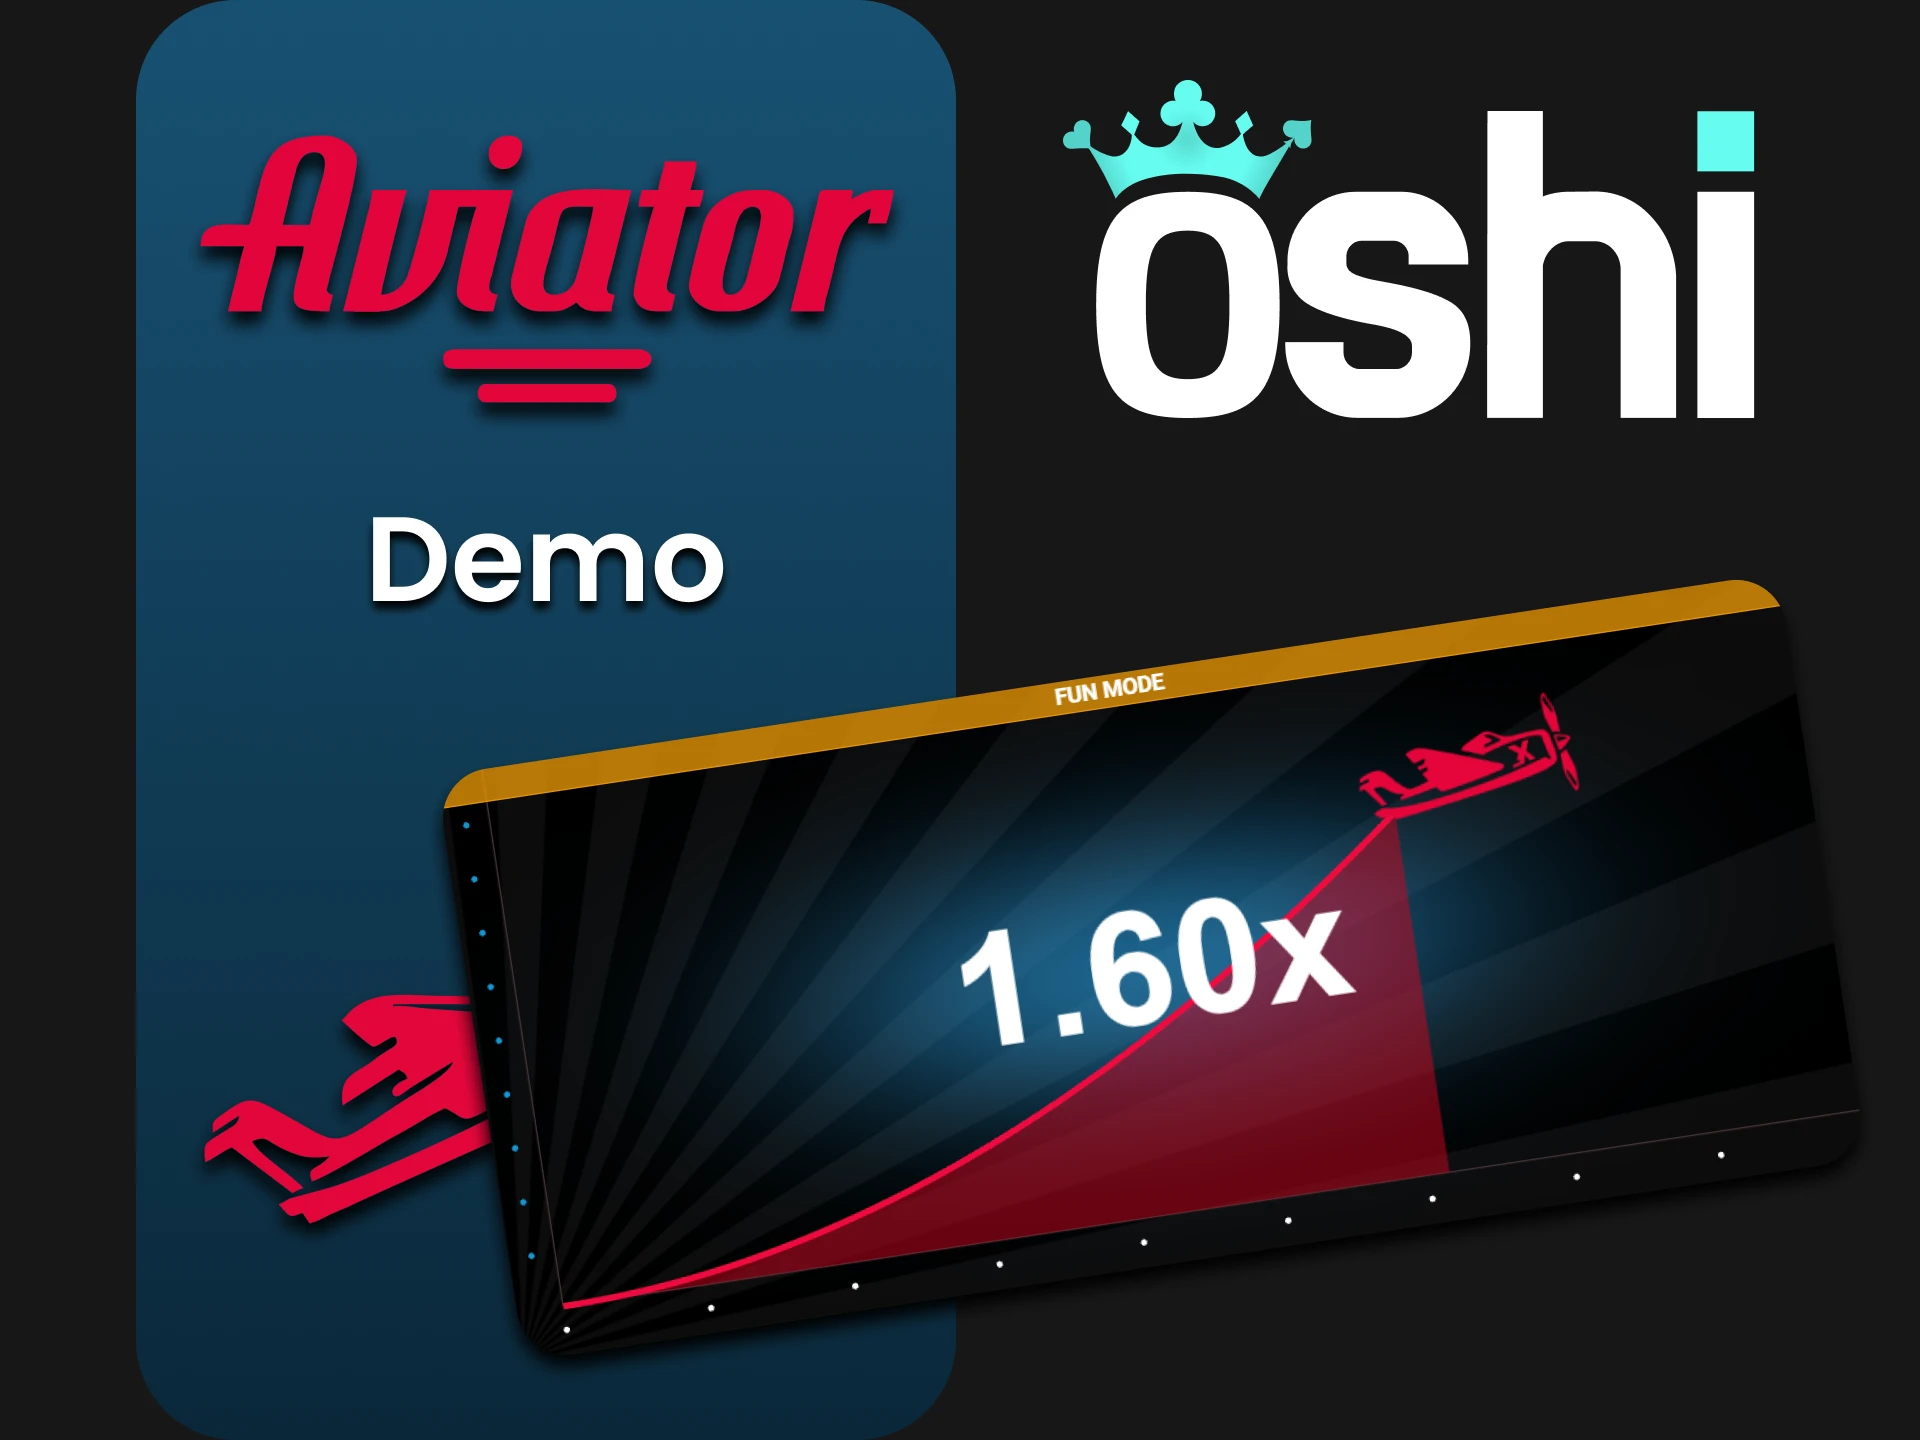 Practice the demo version of Aviator at Oshi Casino.